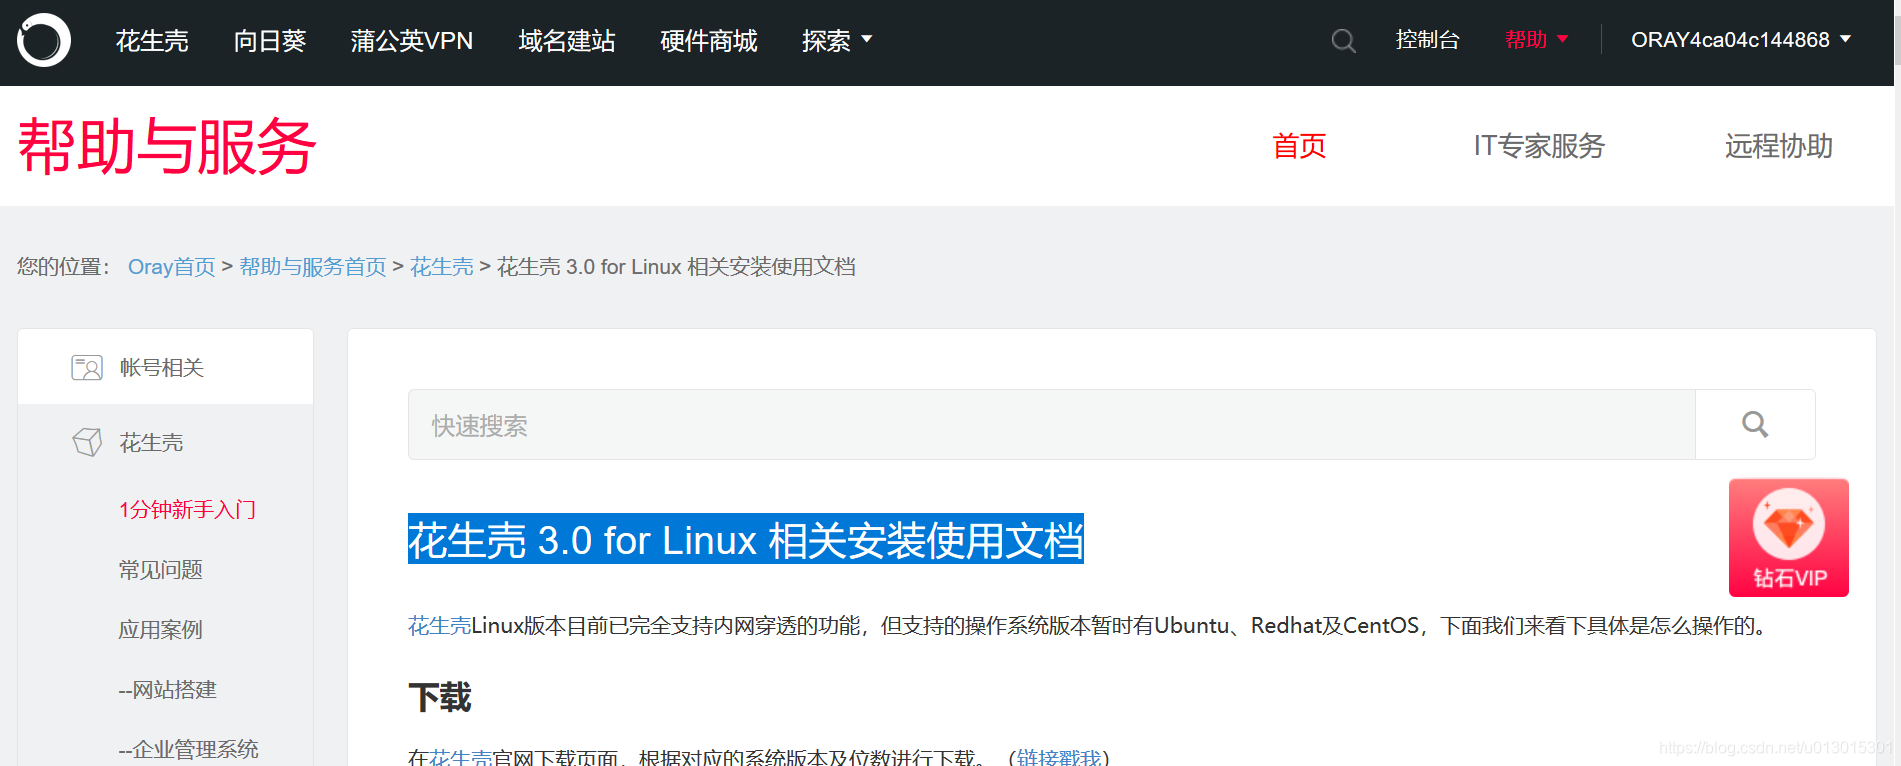 花生壳 3.0 for Linux 相关安装使用文档